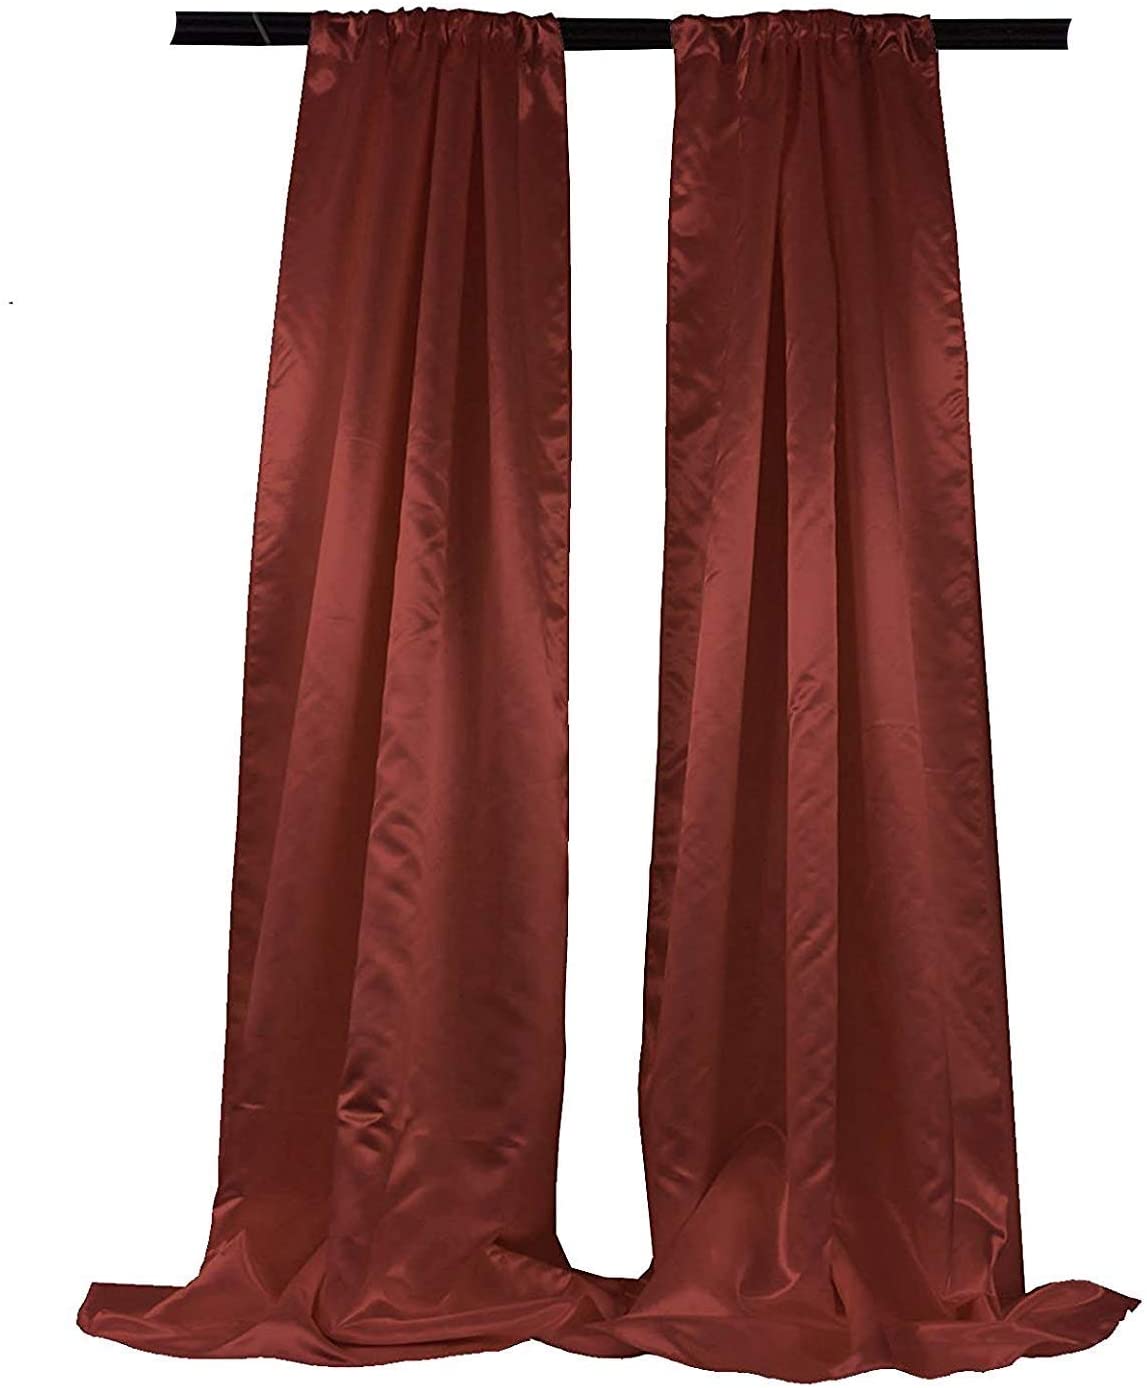 Polyester Bridal Satin Backdrop/Drape. Curtain Panel with 4" Rod Pocket on top, 1 Pair (Burgundy,